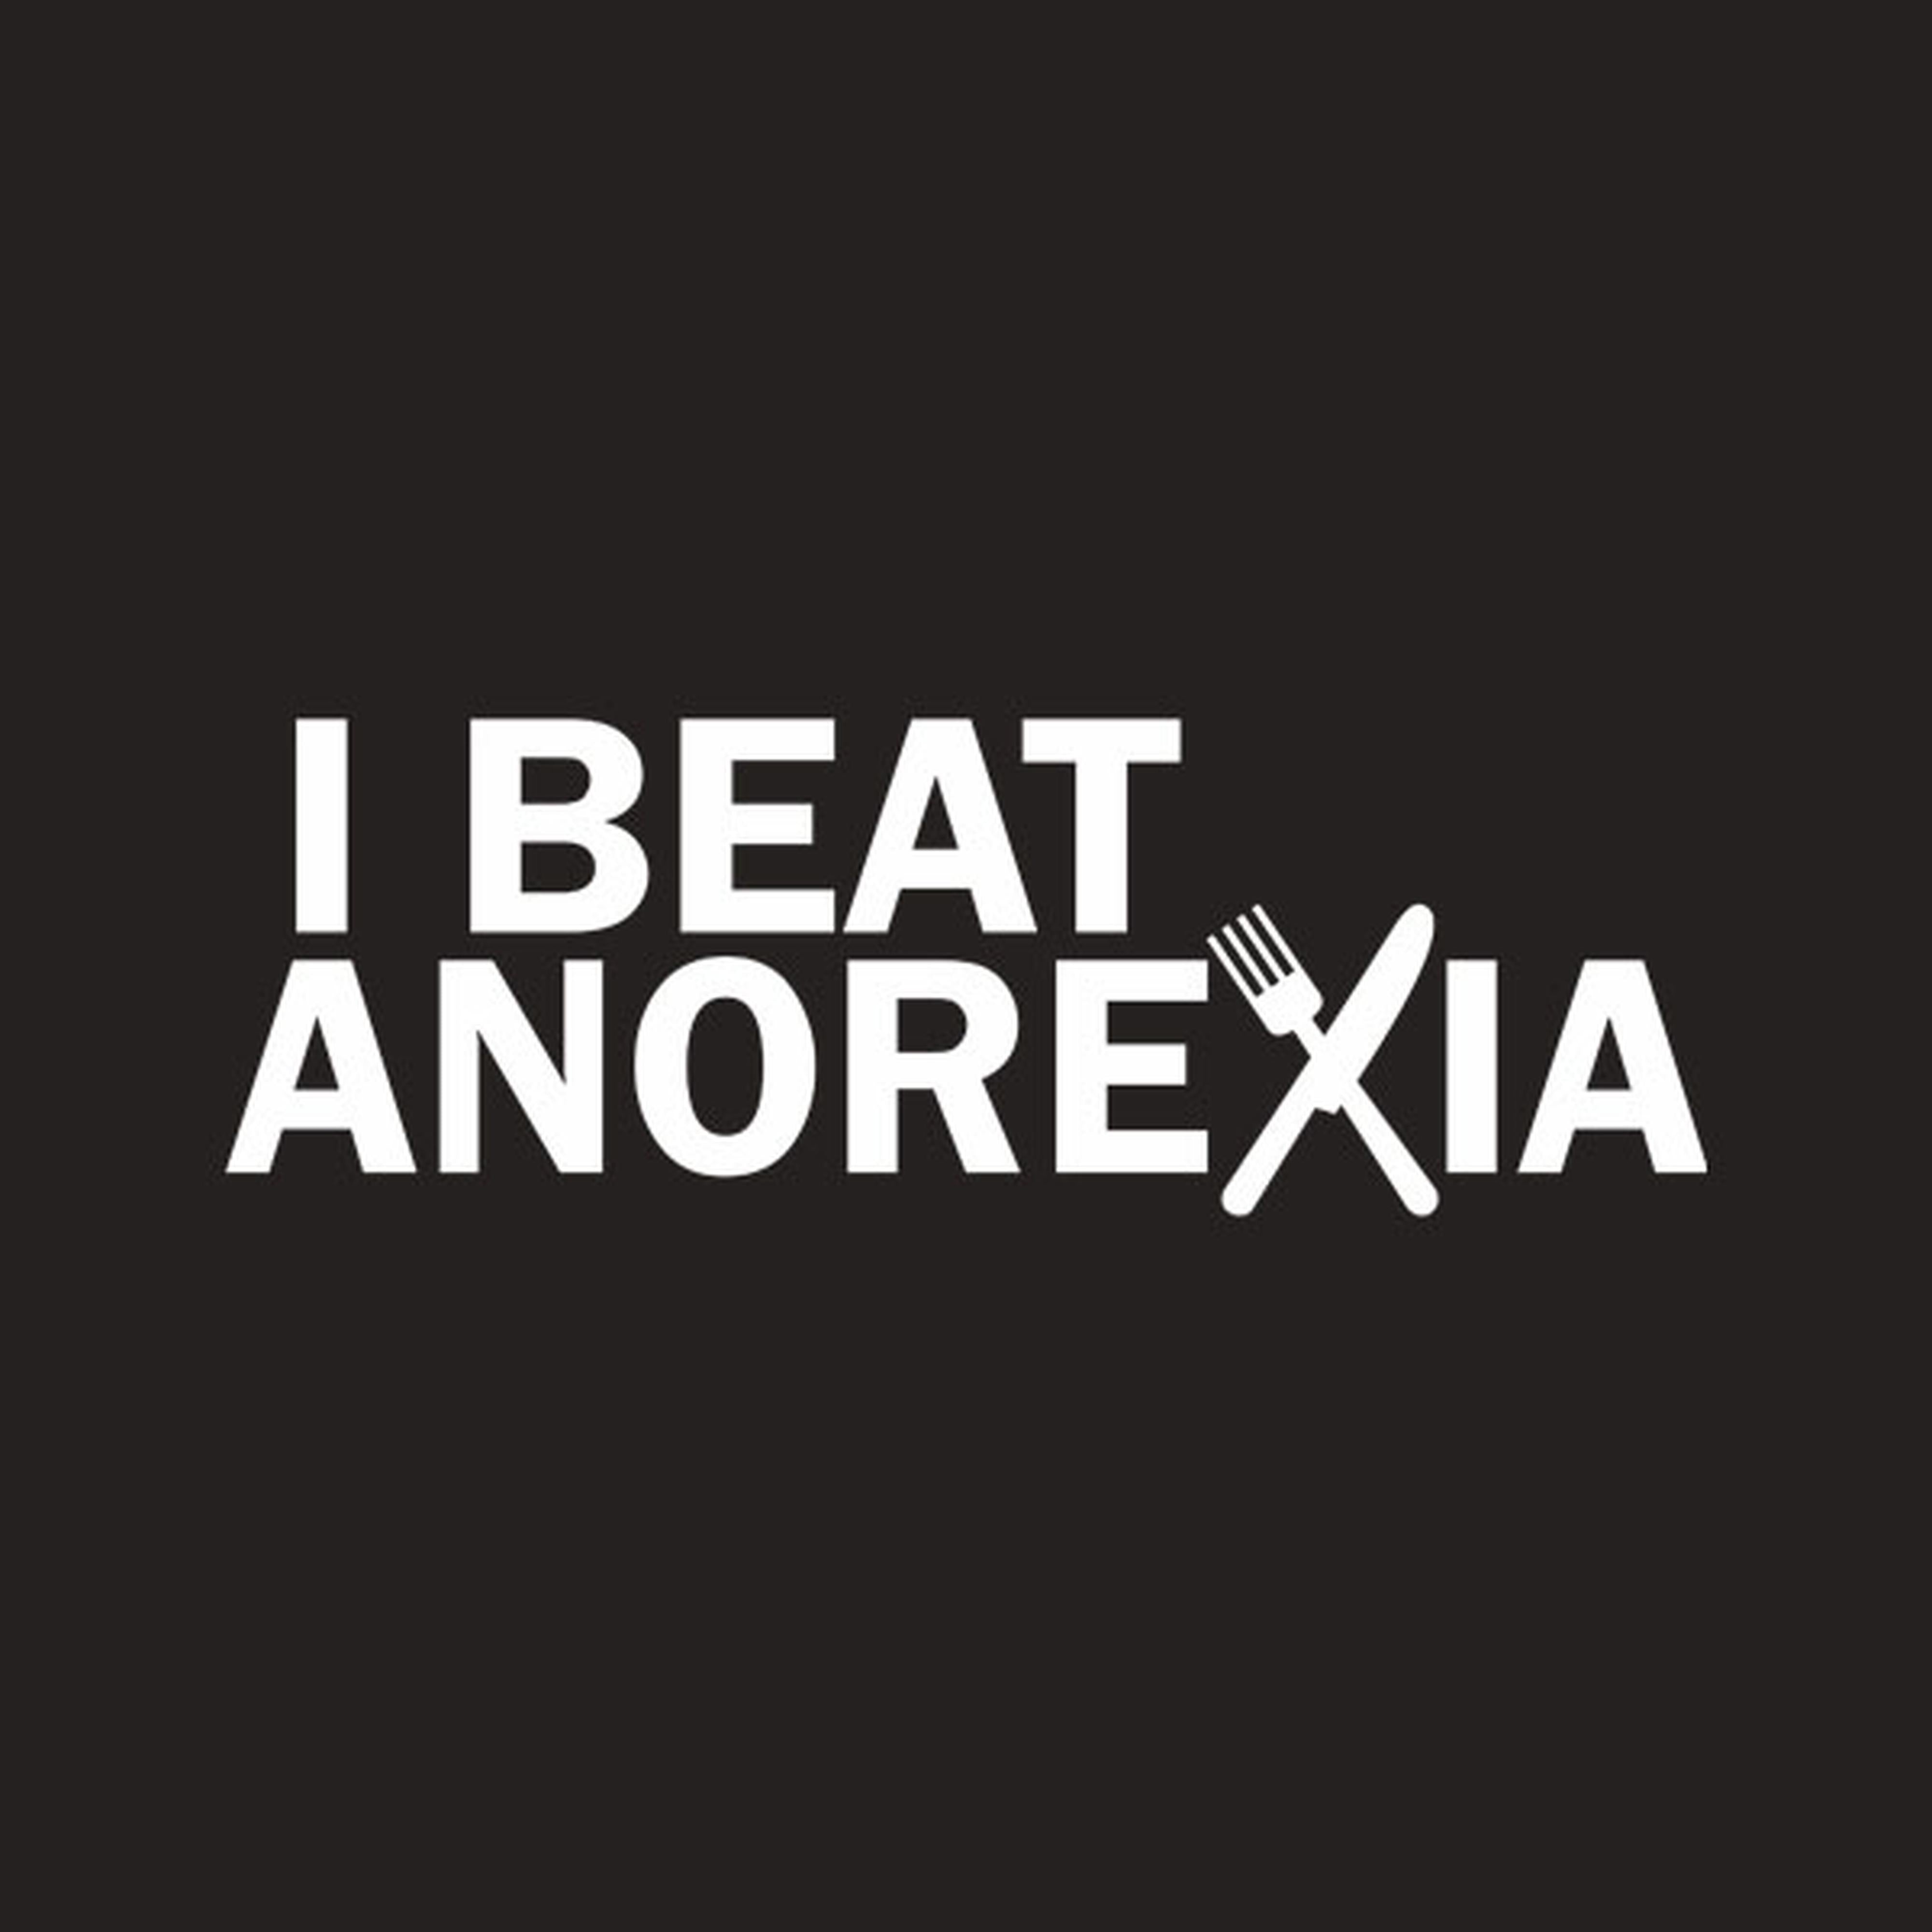 I beat anorexia - T-shirt